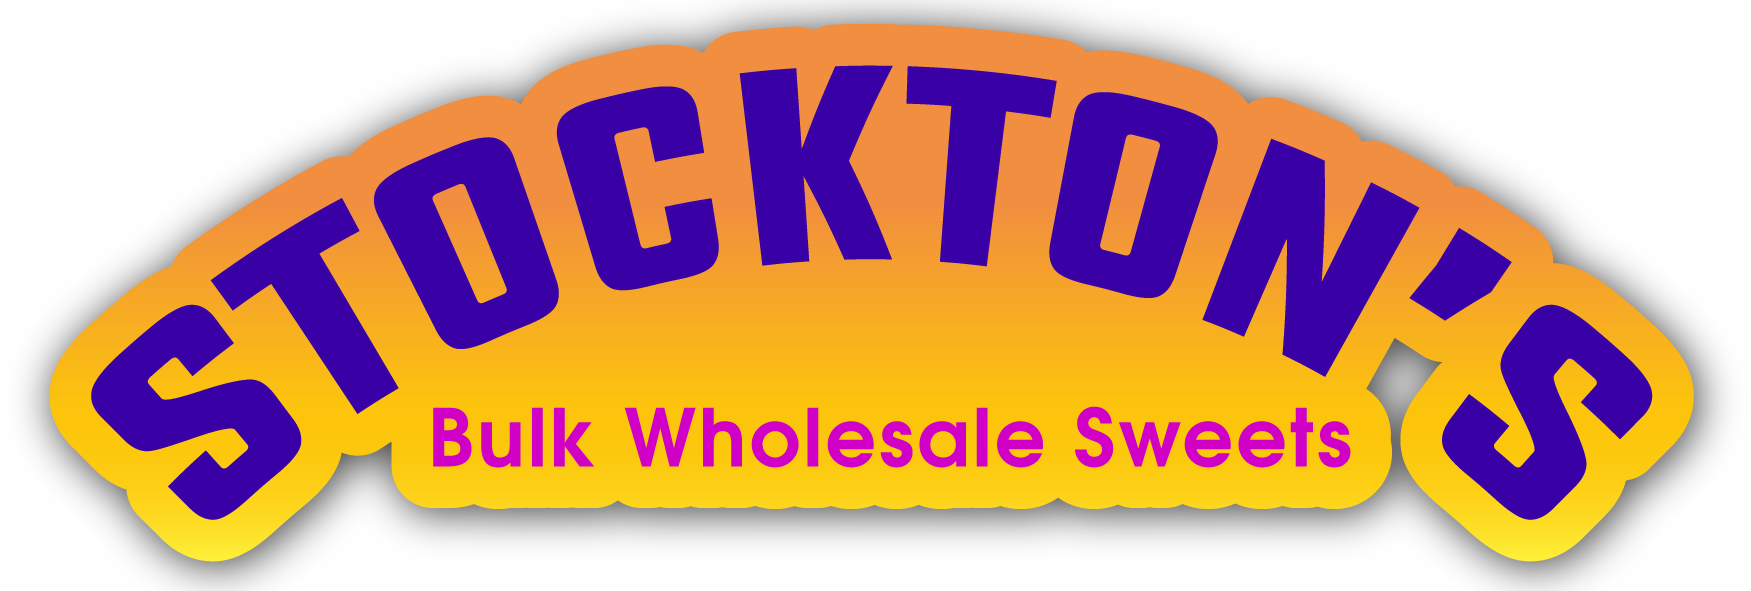 Stockton’s Wholesale Sweets